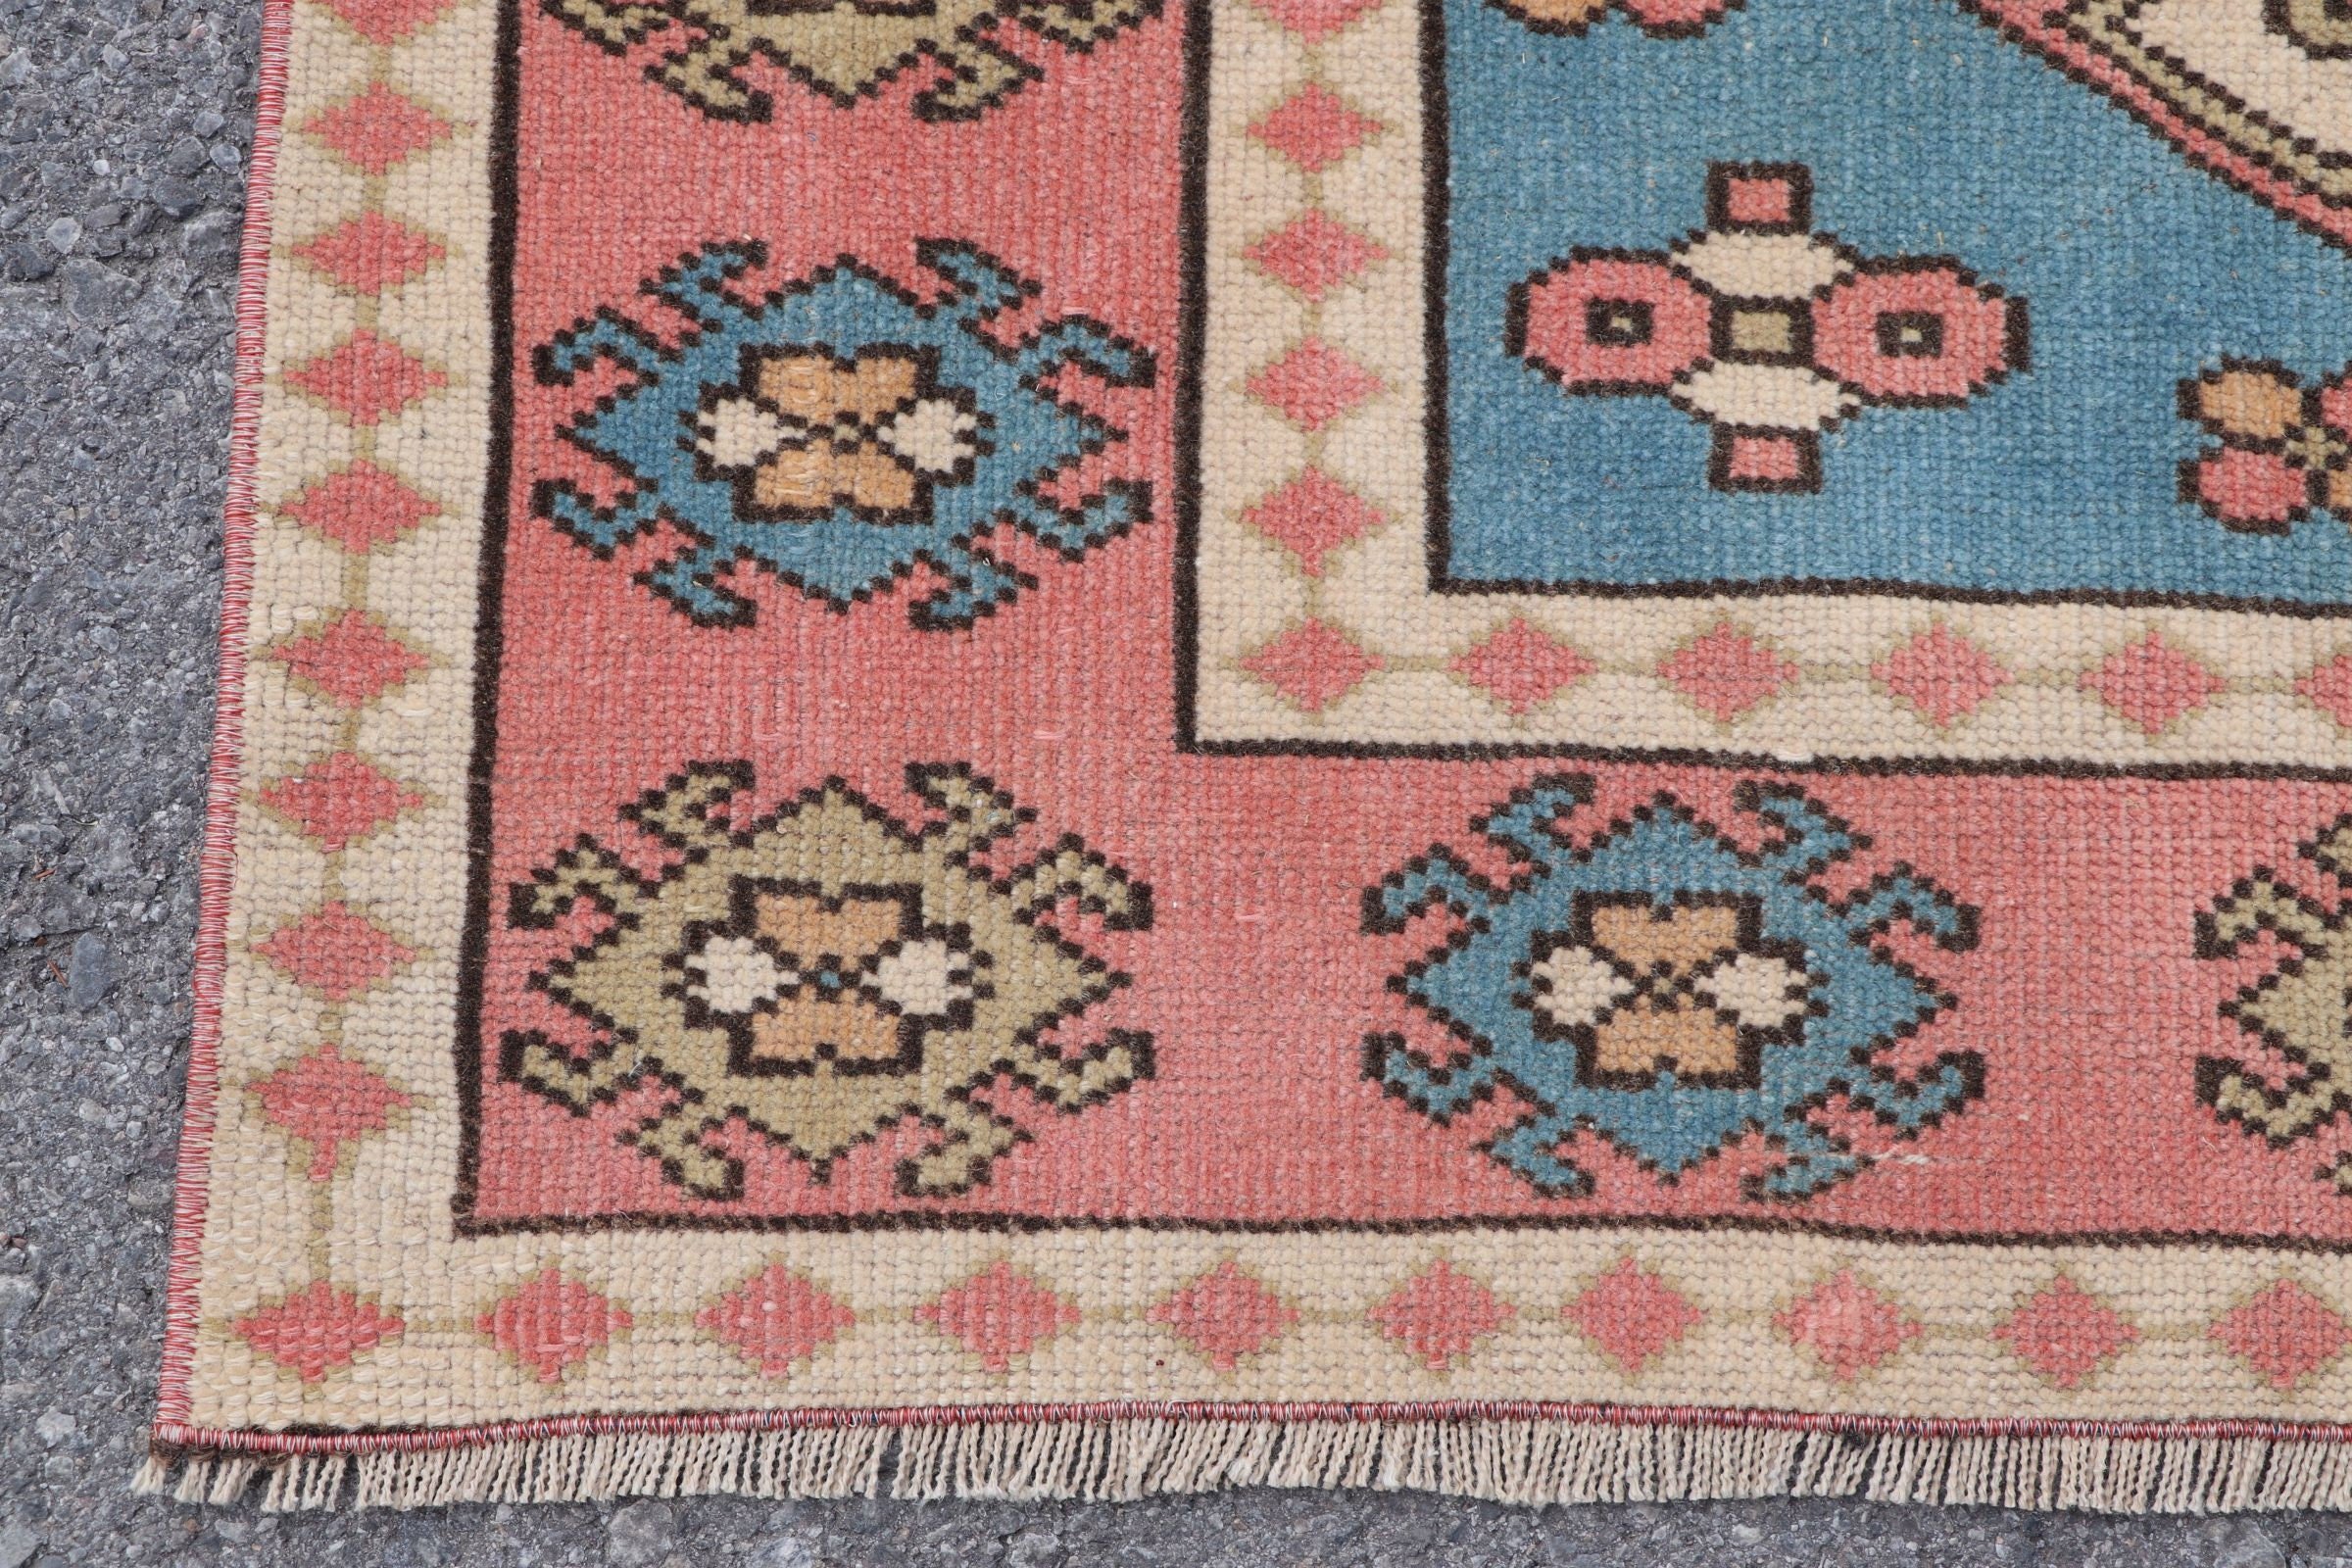 Rugs for Dining Room, Kitchen Rugs, Bedroom Rug, Turkish Rug, Beige Anatolian Rugs, 5.1x7.1 ft Area Rugs, Vintage Rug